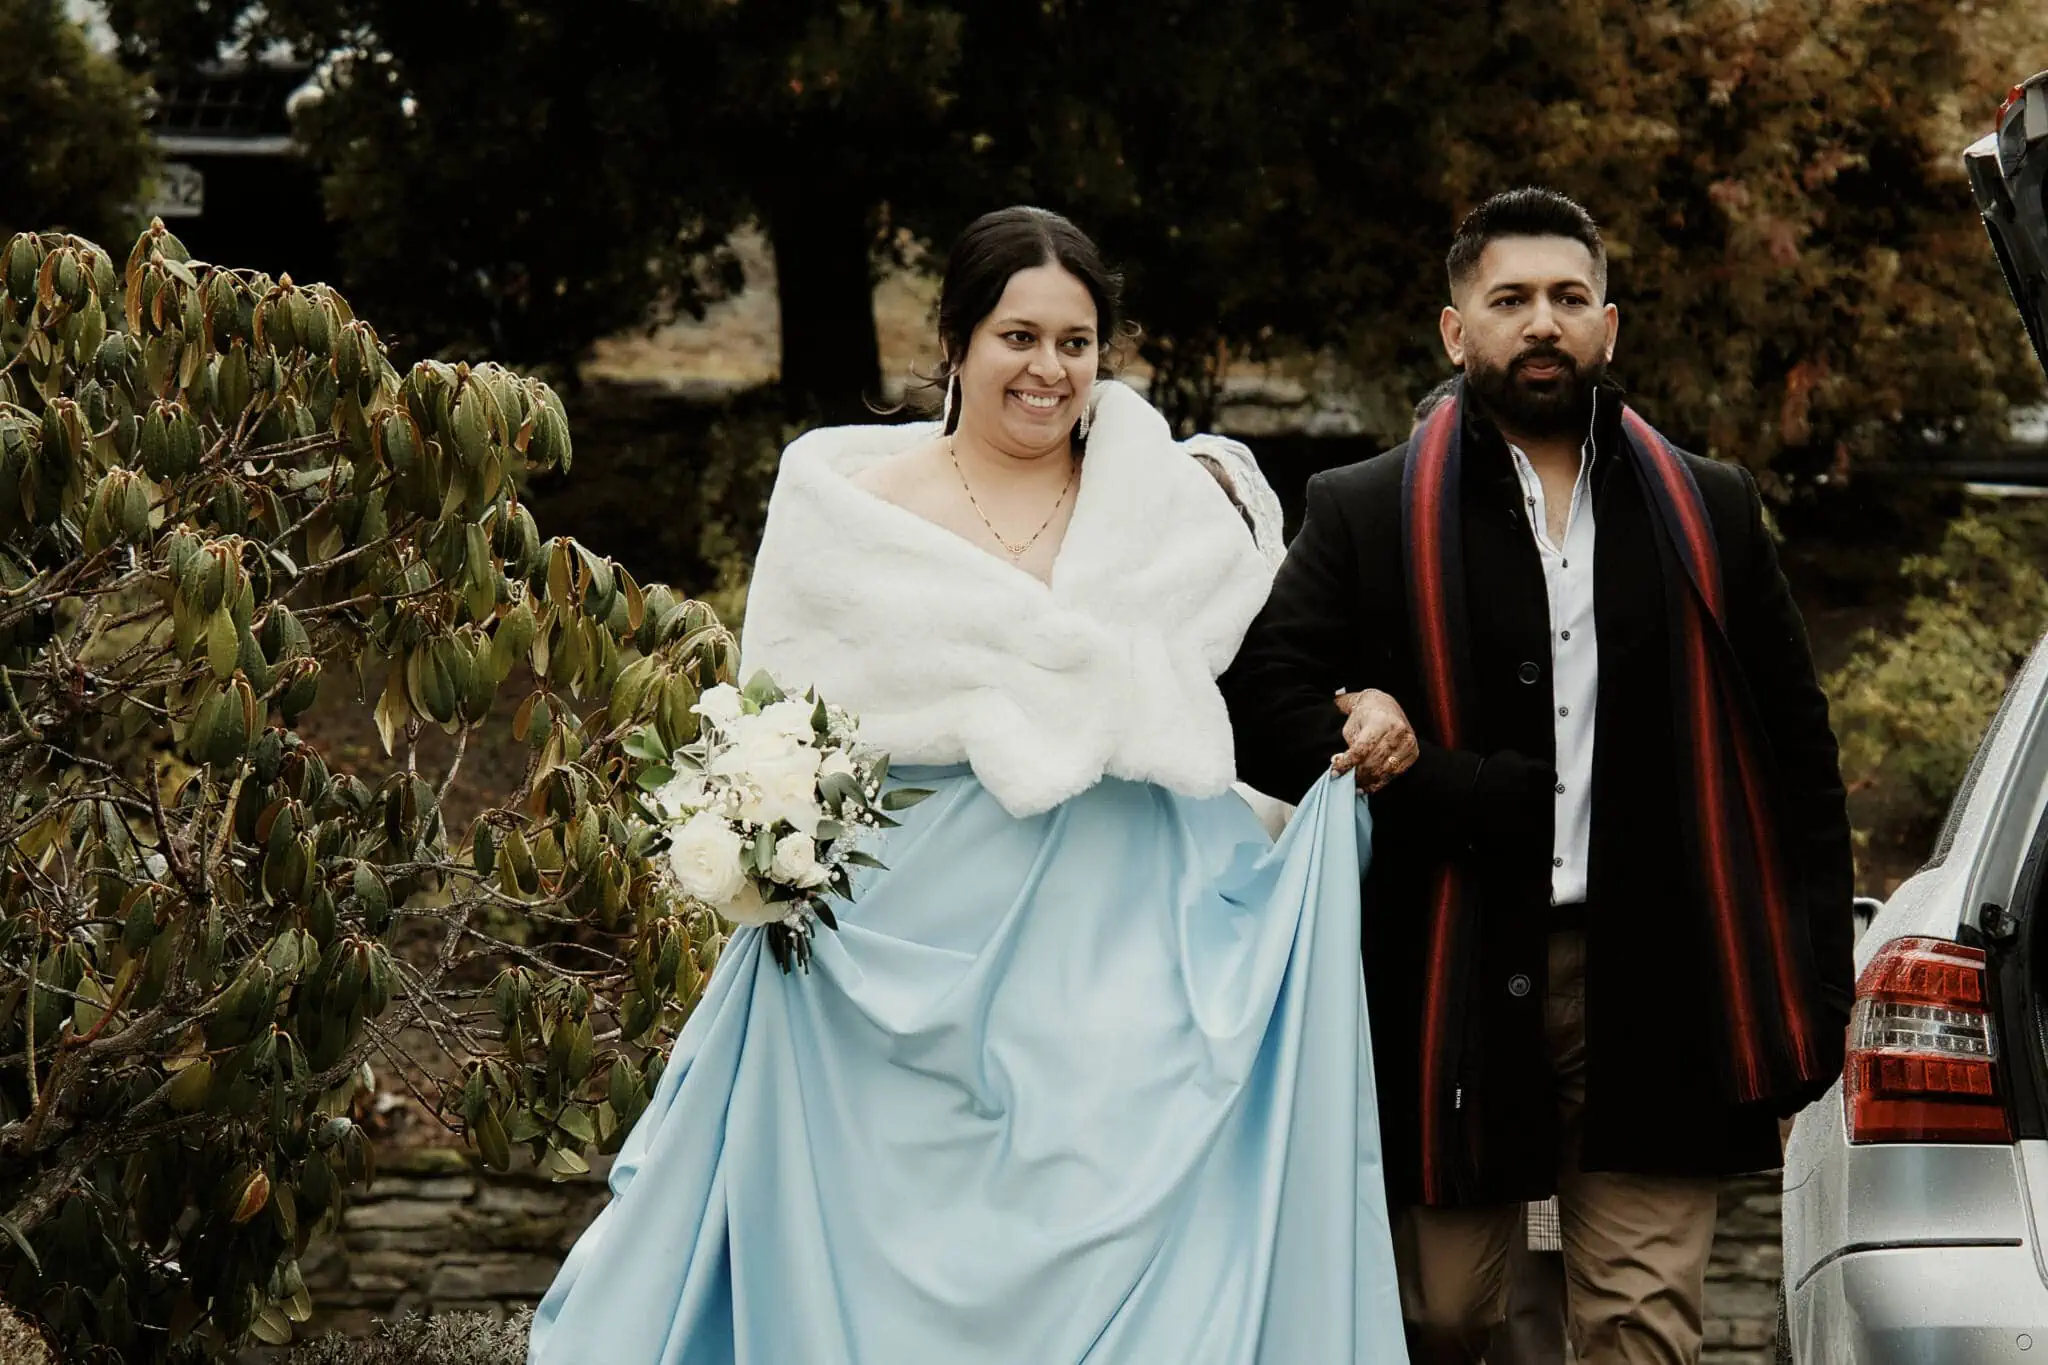 Queenstown New Zealand Elopement Wedding Photographer - Wasim and Yumn, Queenstown Islamic Wedding couple, walking to their car in a blue dress.